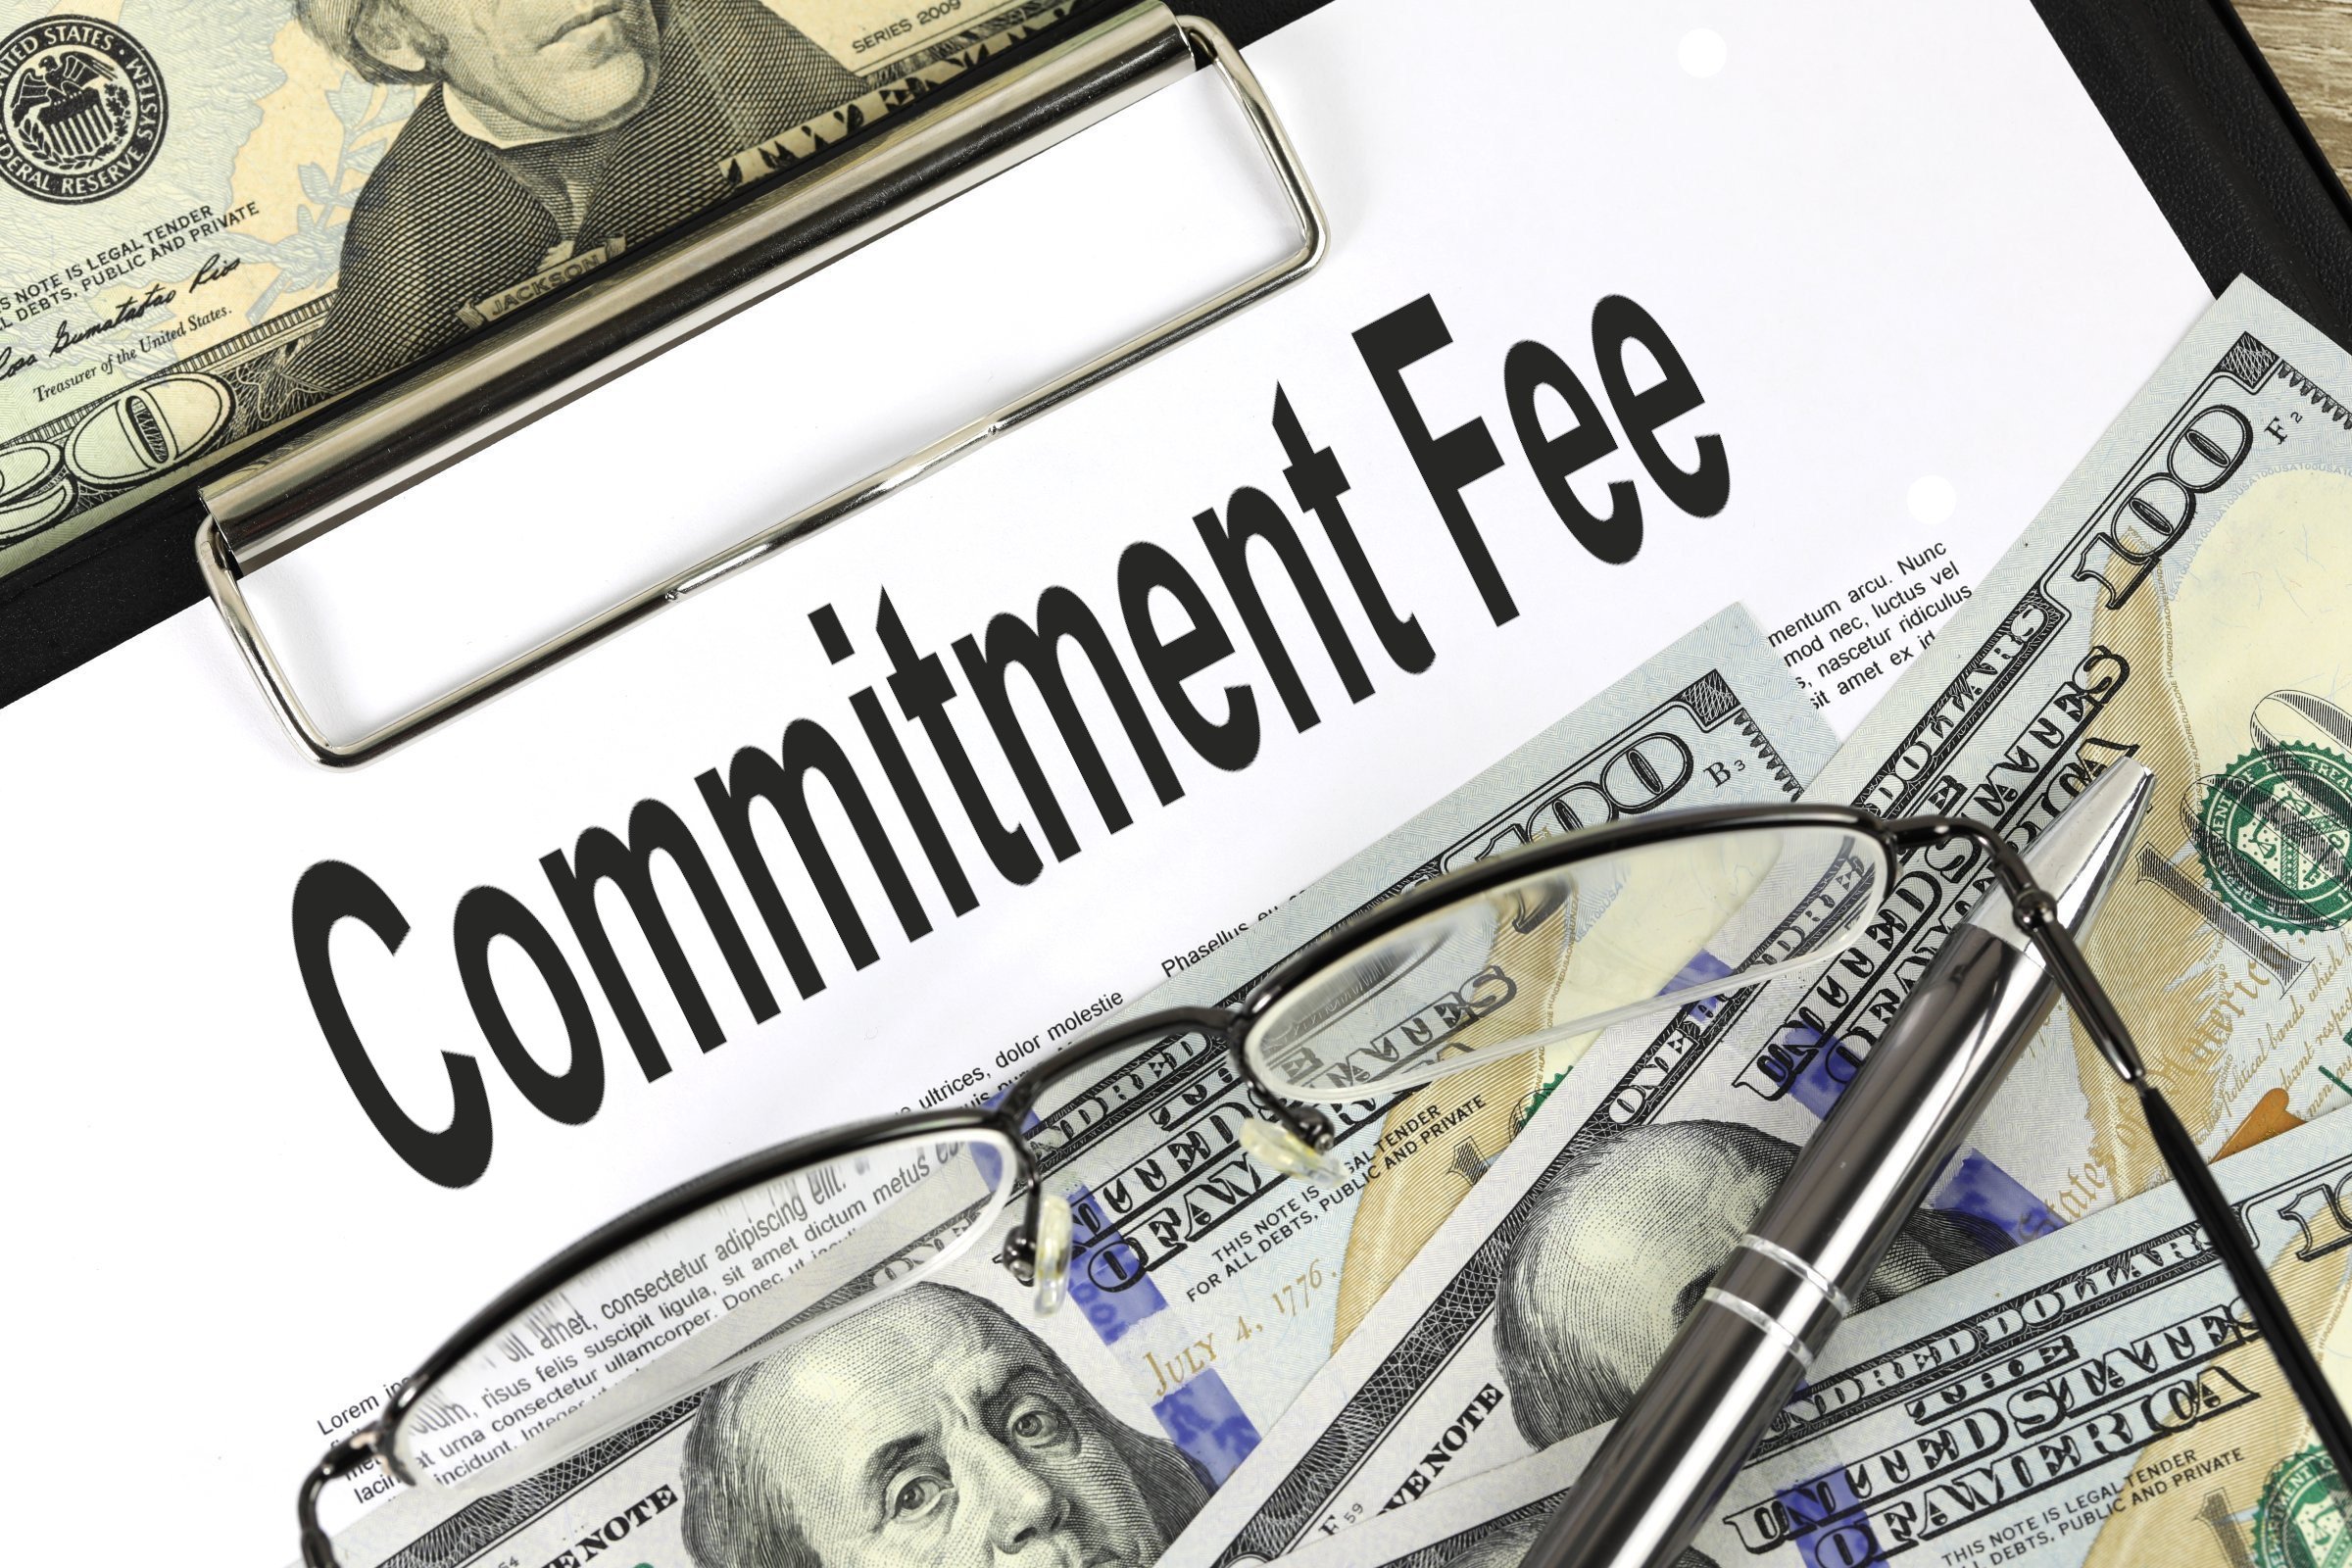 commitment fee